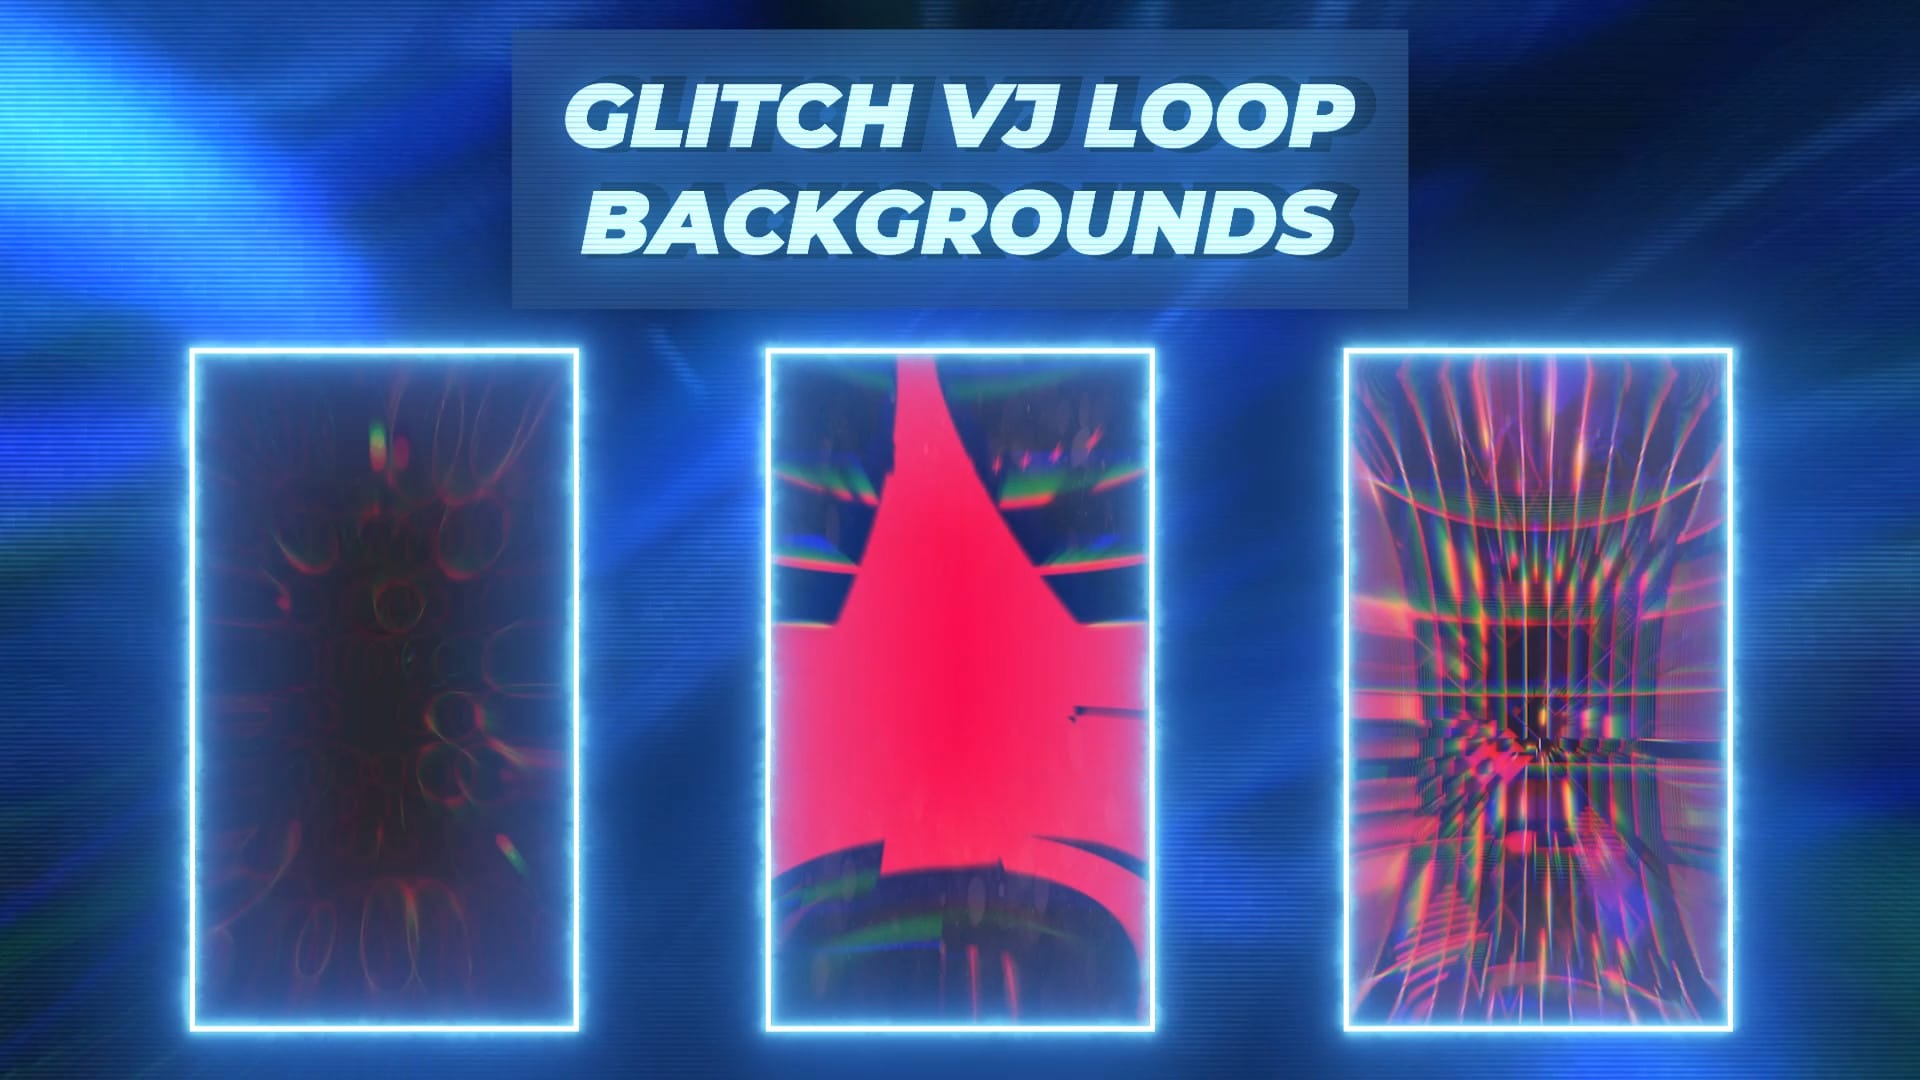 Glitch Door - VJ Video Loop. Full HD Glitch Motion Background